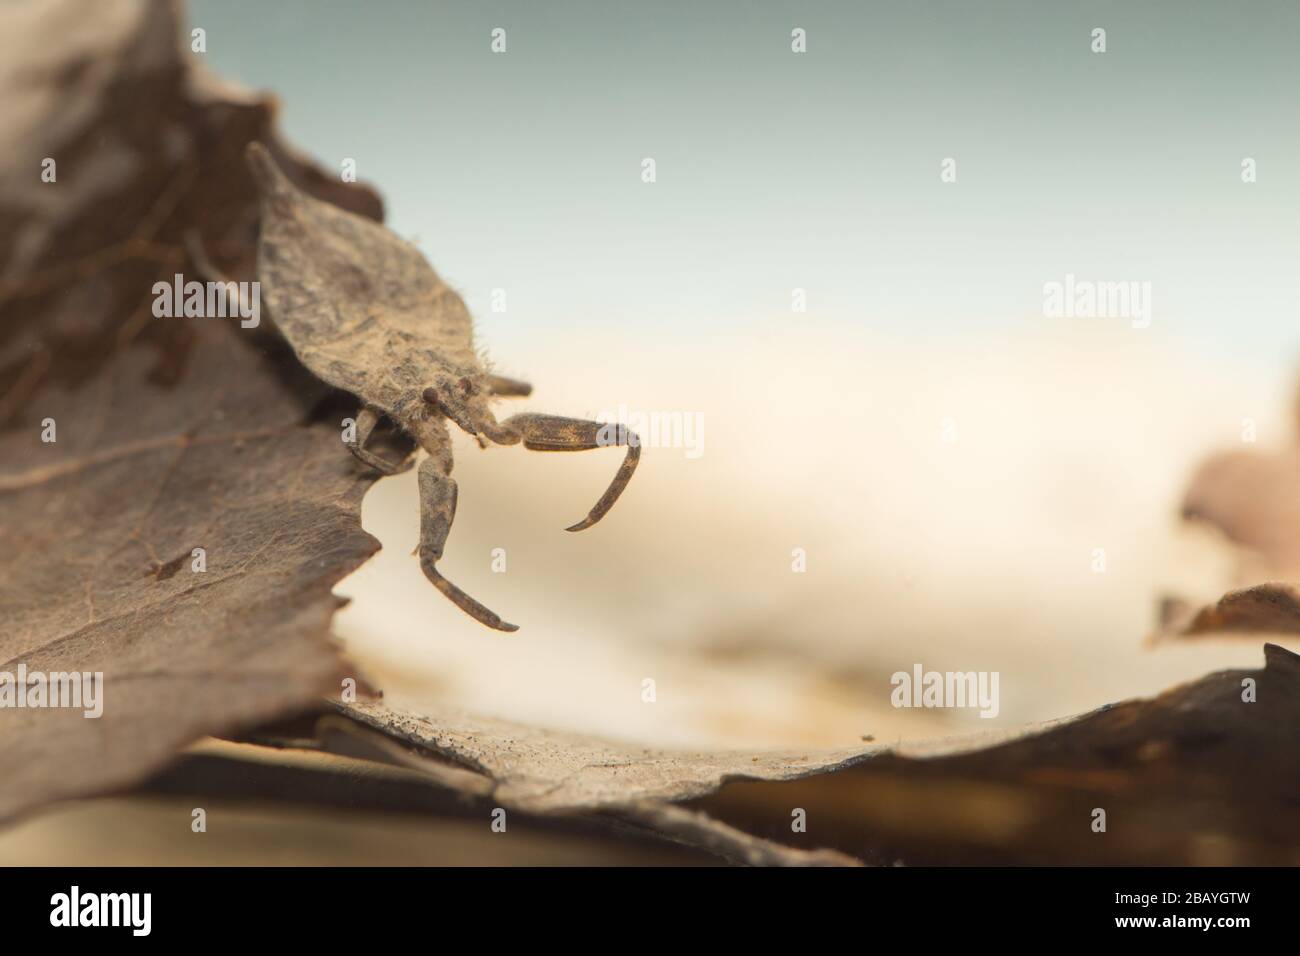 Water scorpion (Nepa cinerea) Stock Photo